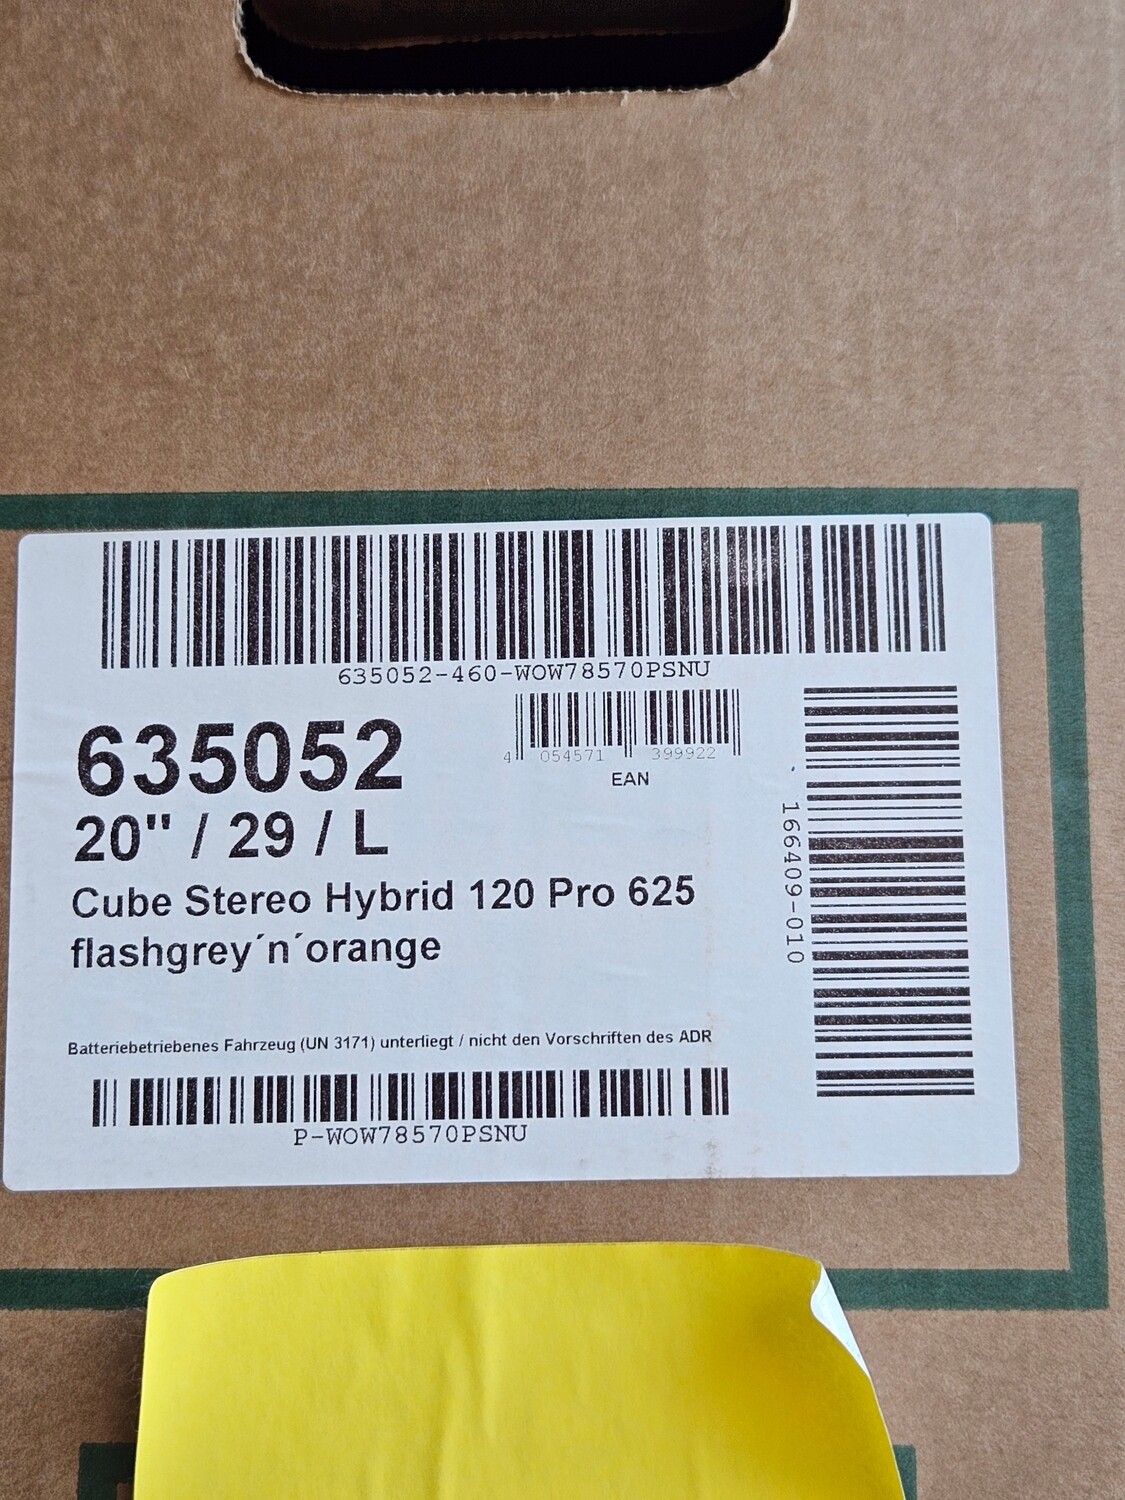 Cube Stereo Hybrid 120 Pro 625 Large